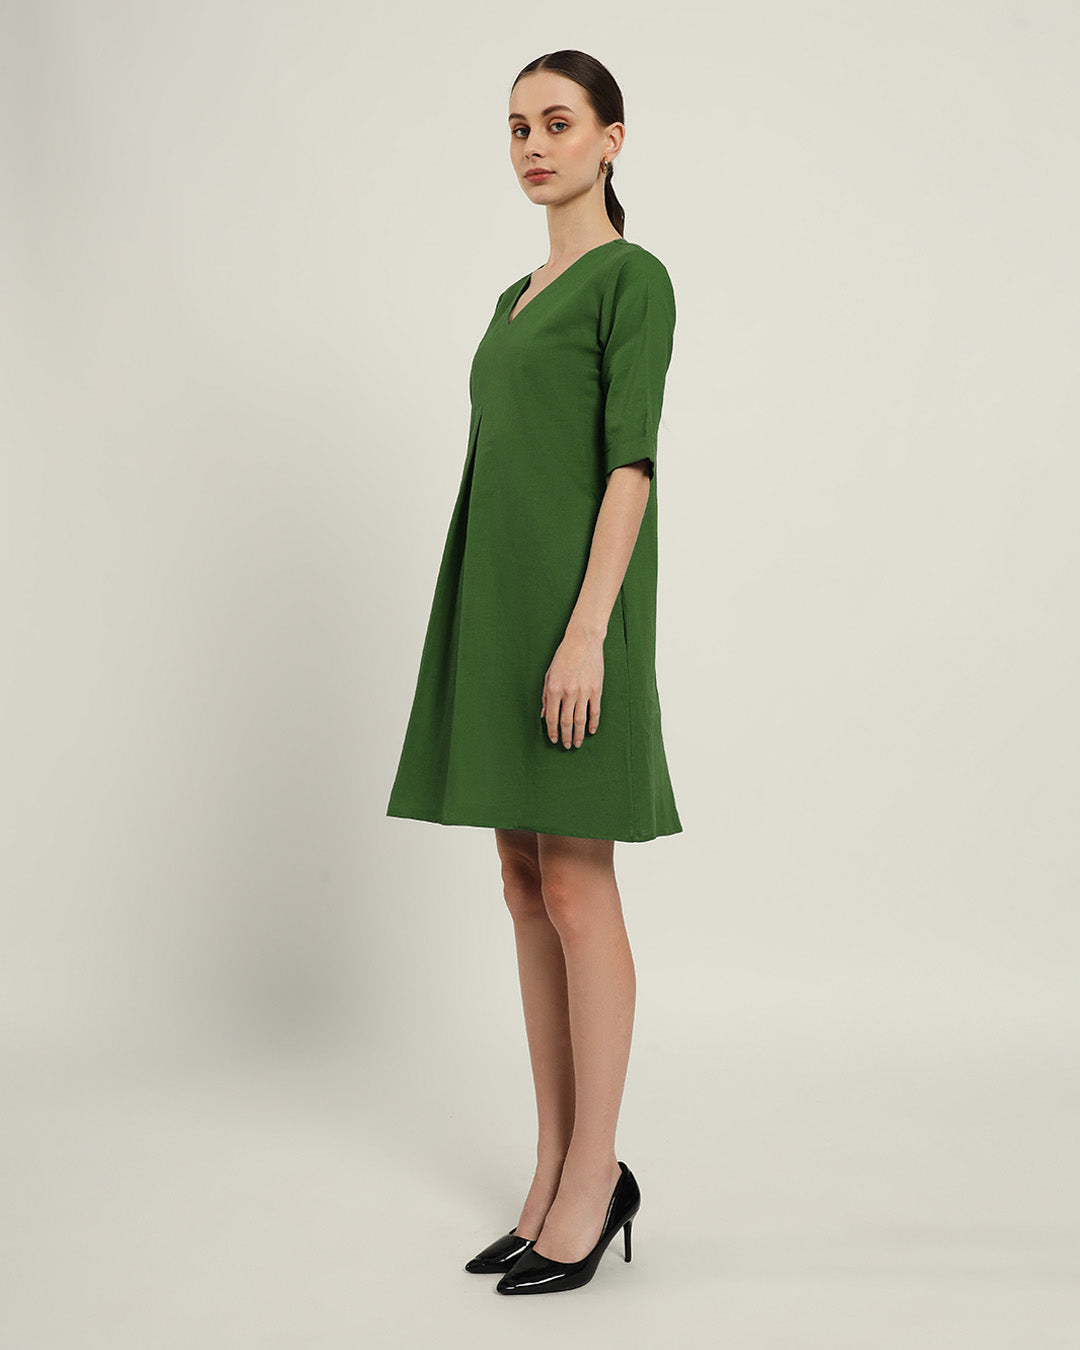 The Giza Emerald Cotton Dress